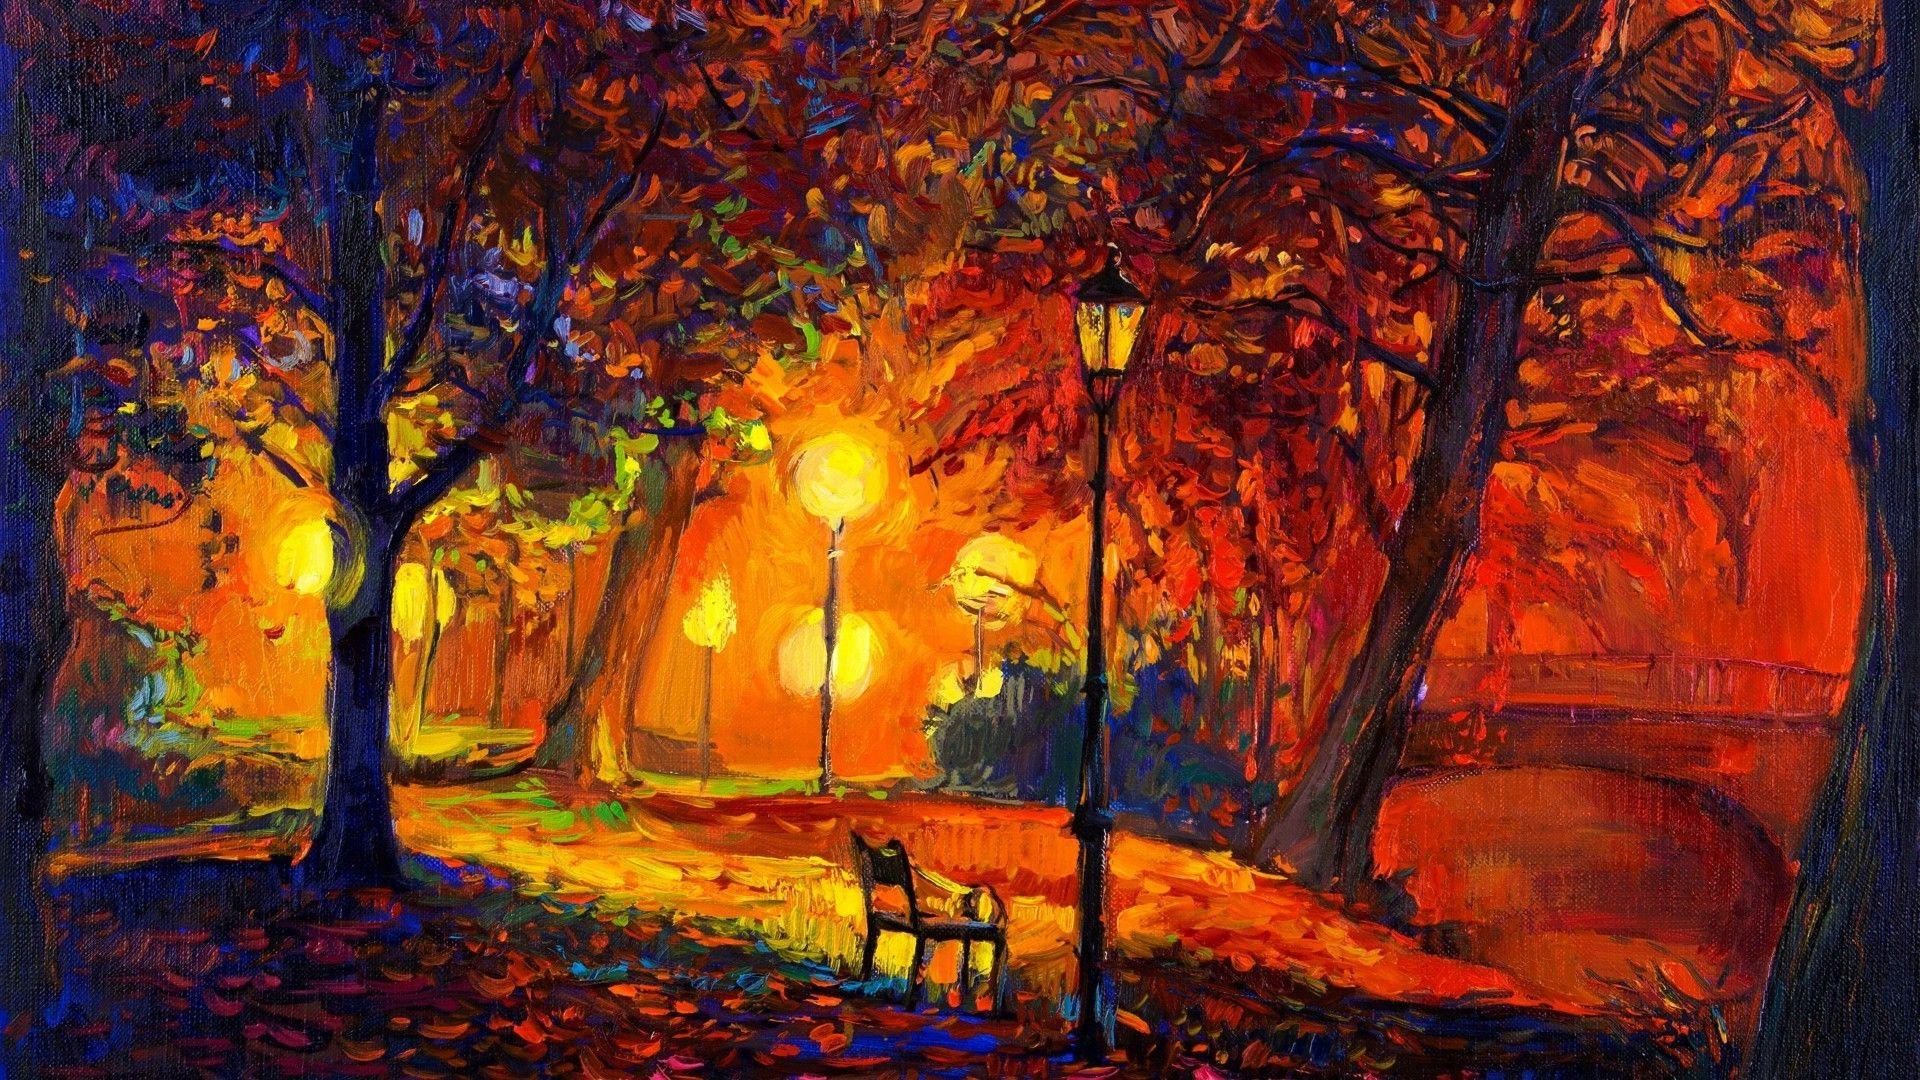 digital Art, Nature, Trees, Painting, Park, Bench, Lamps, Fall. Landscape wallpaper, Painting wallpaper, Landscape paintings